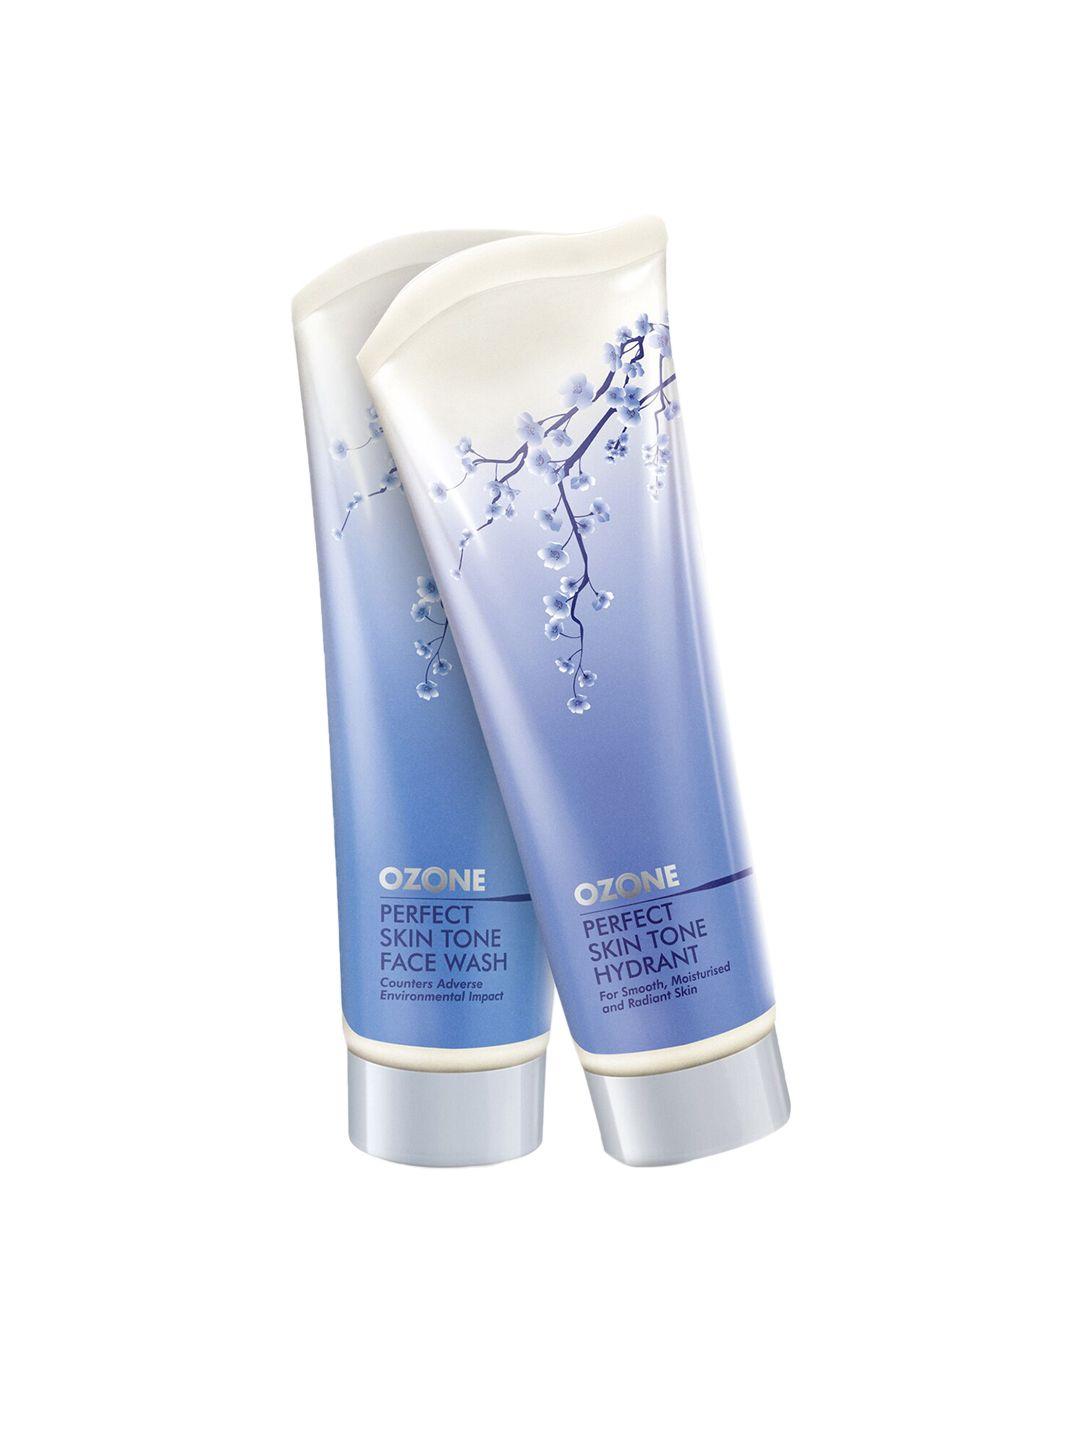 ozone set of perfect skin tone face wash & hydrant - 100 ml each